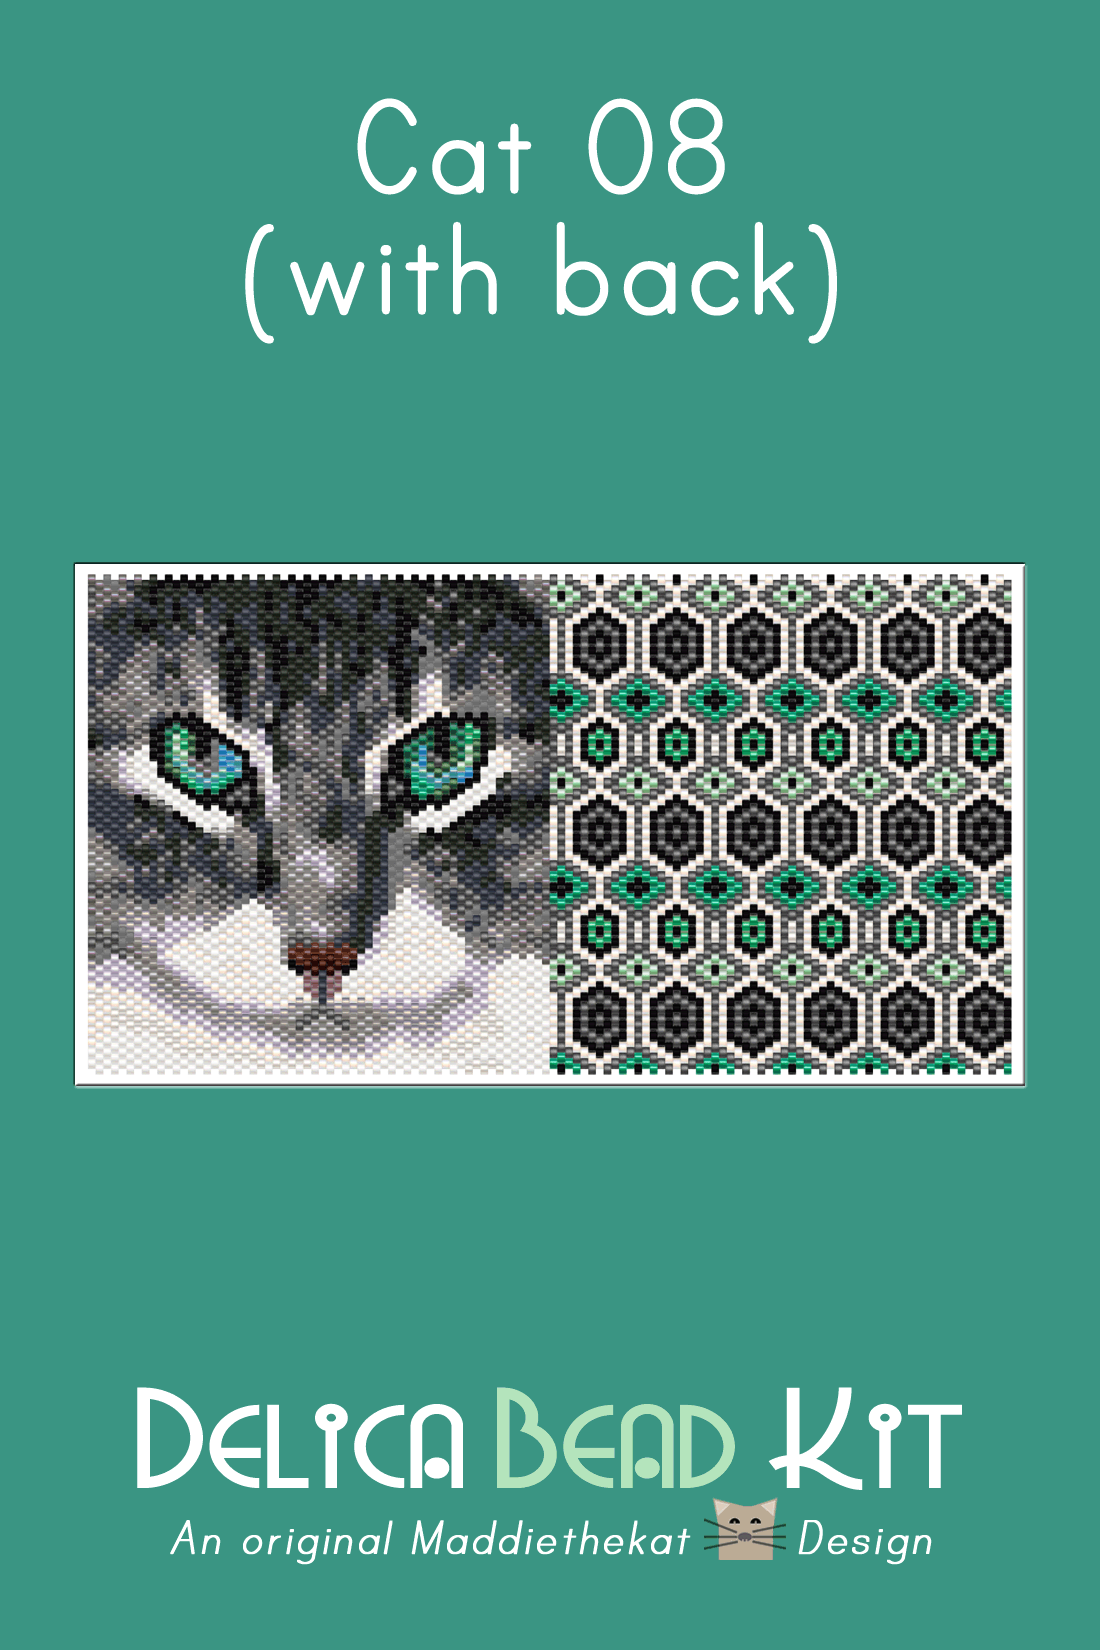 Cat 08 with Back Peyote Bead Pattern PDF or Bead Kit